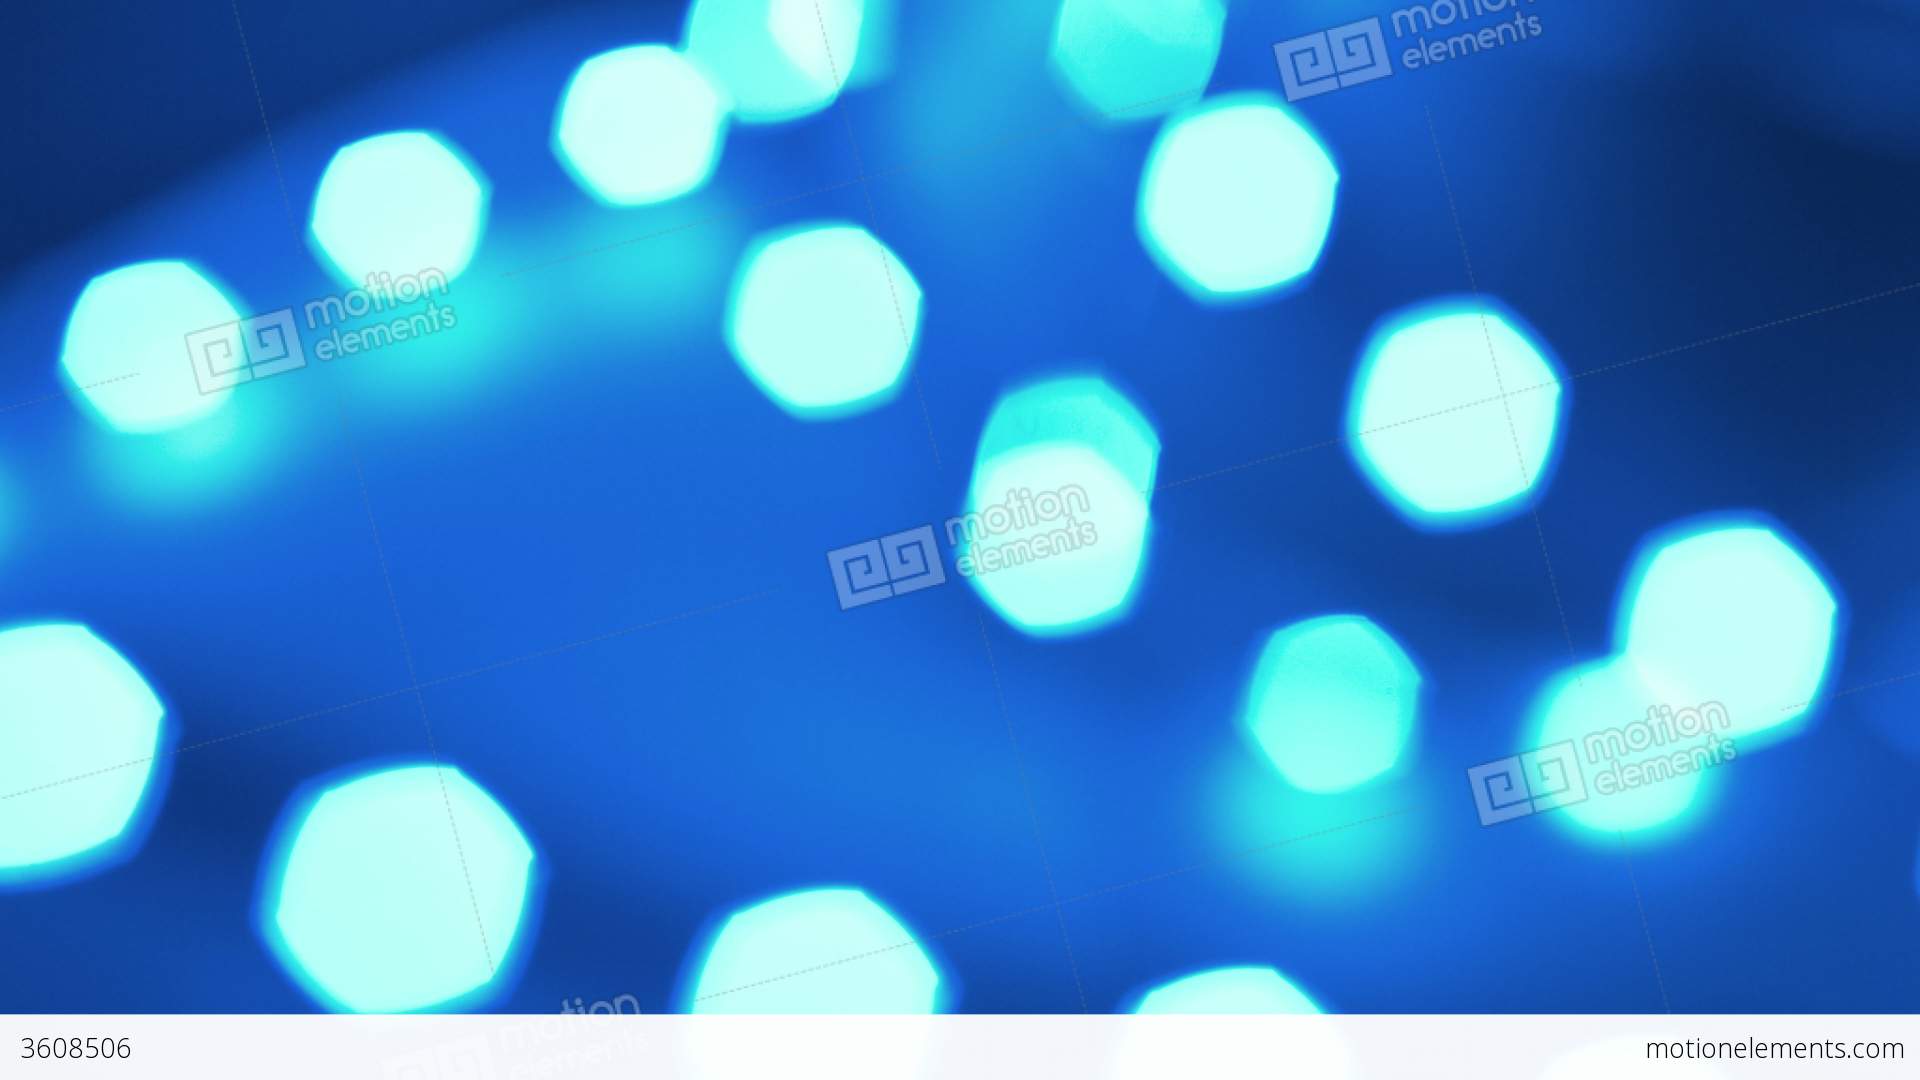 Bokeh Effect, Blurred Blue Lights 4k Stock video footage | 3608506